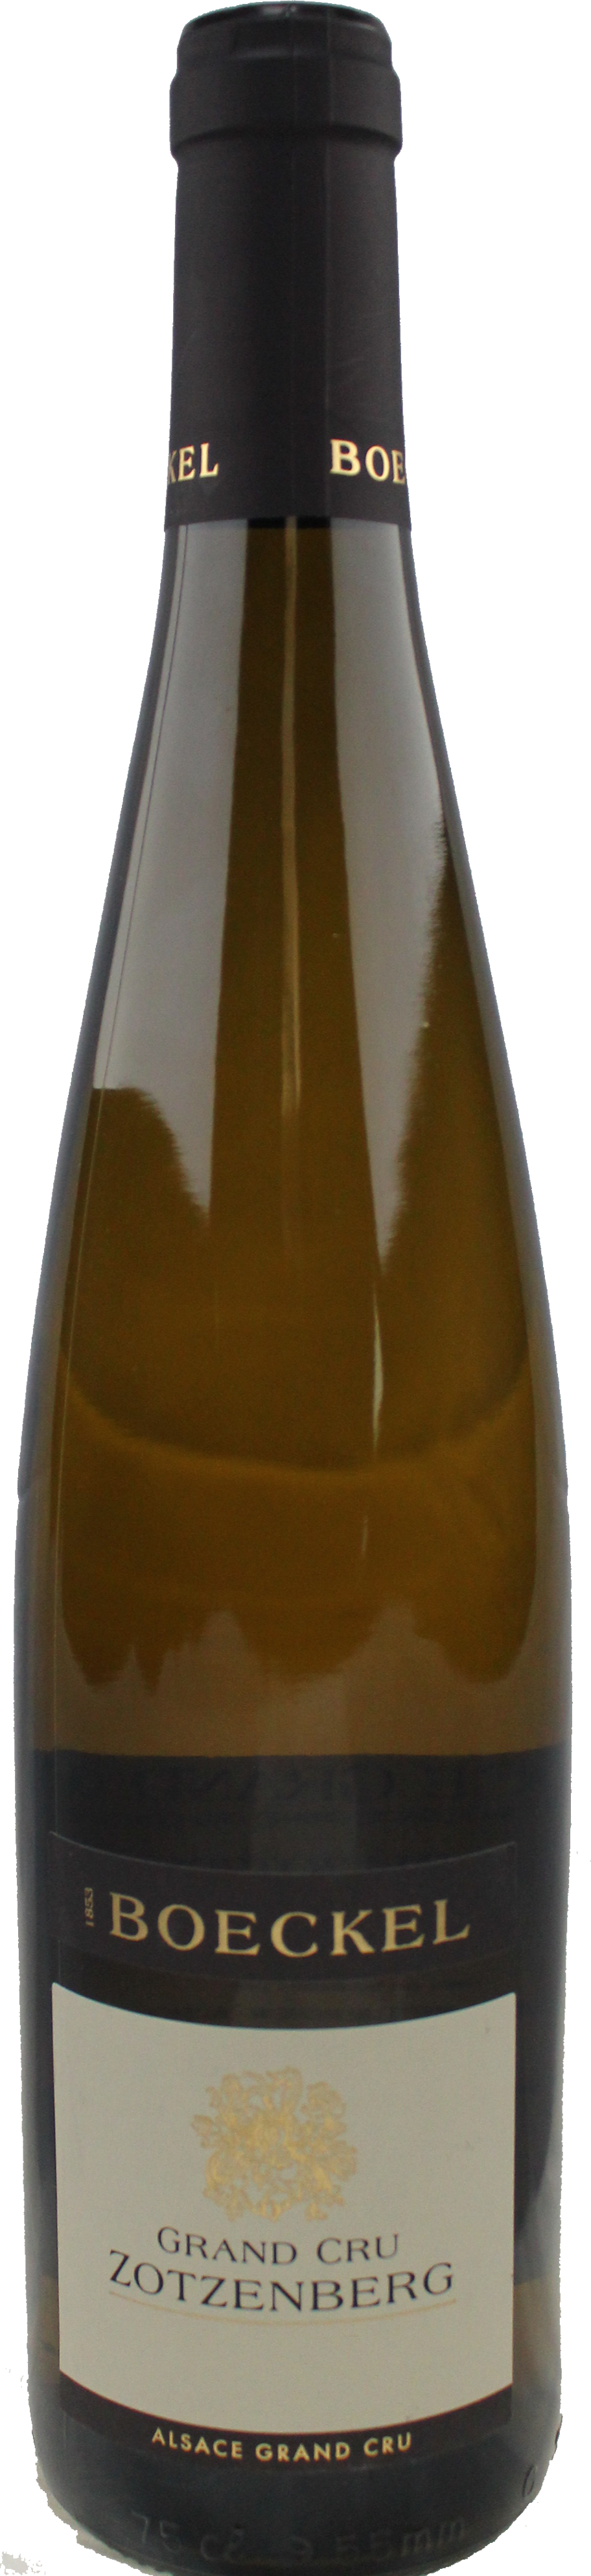 Bottle shot of 2012 Gewurztraminer Grand Cru Zotzenberg